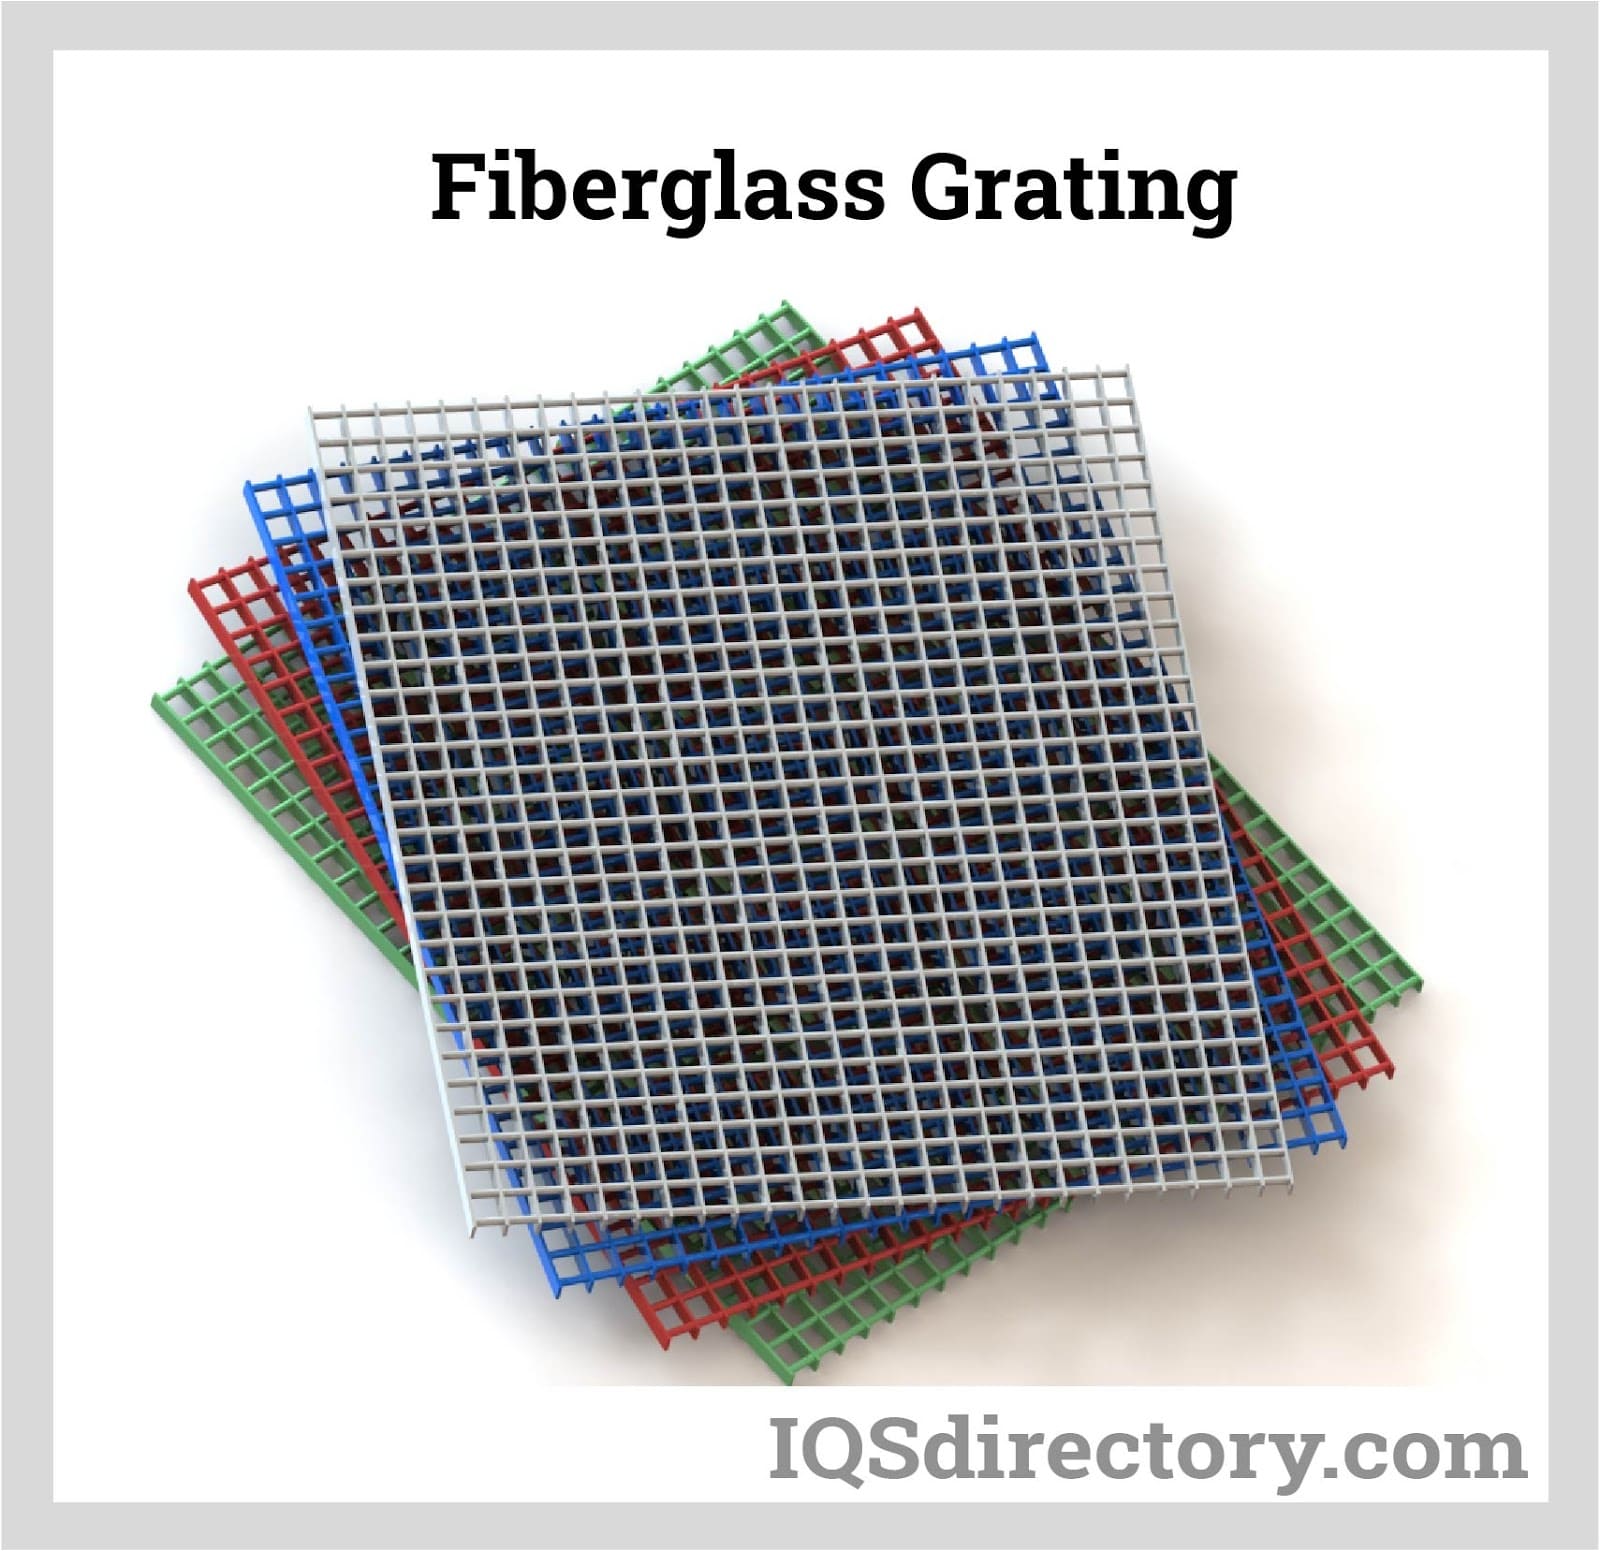 Fiberglass Grating